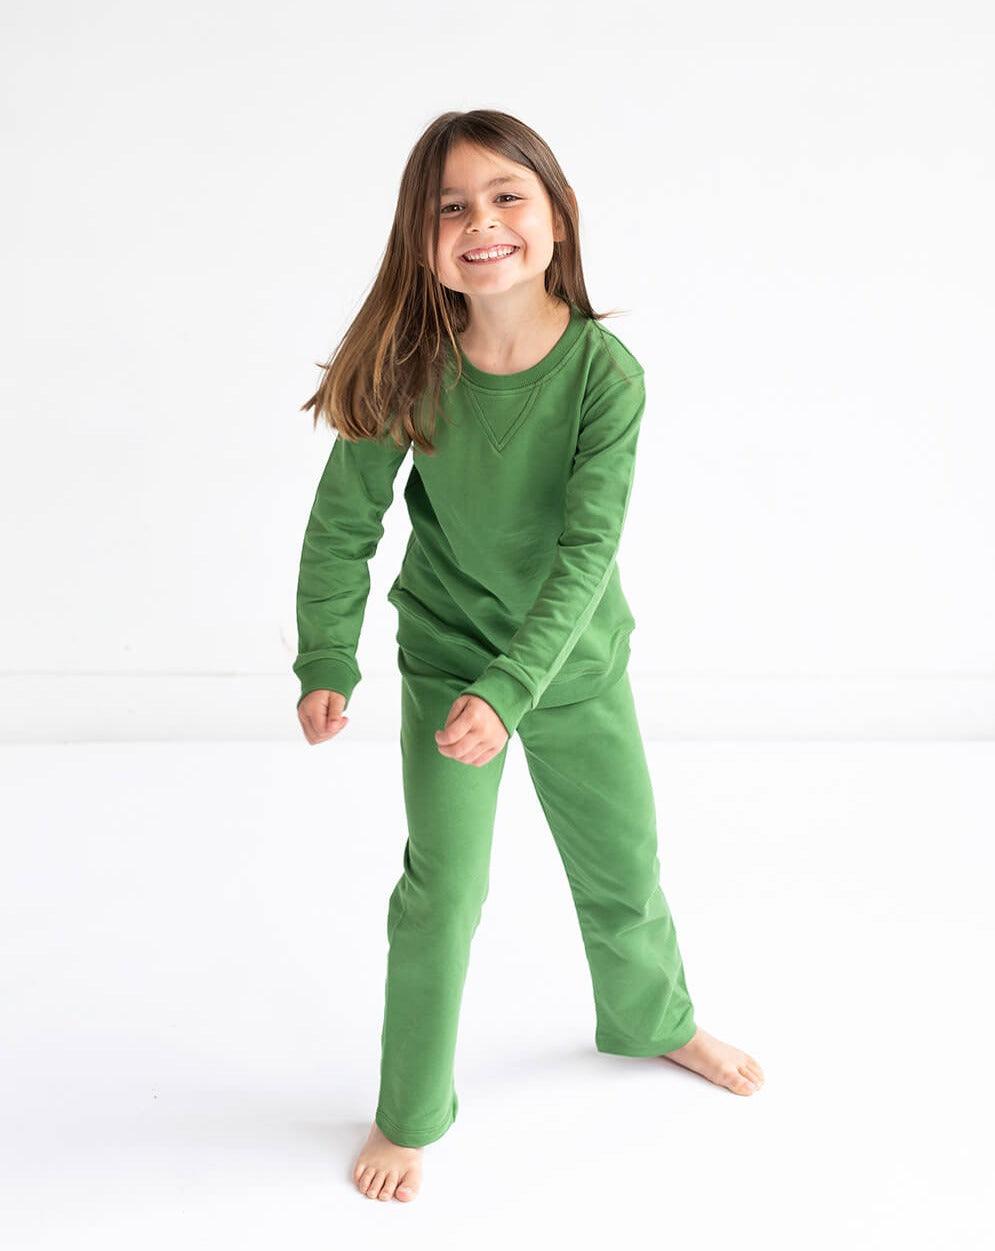 QYZEU Sweat Pants for Teens Girls Girls 10/12 Outfits Toddler Kids